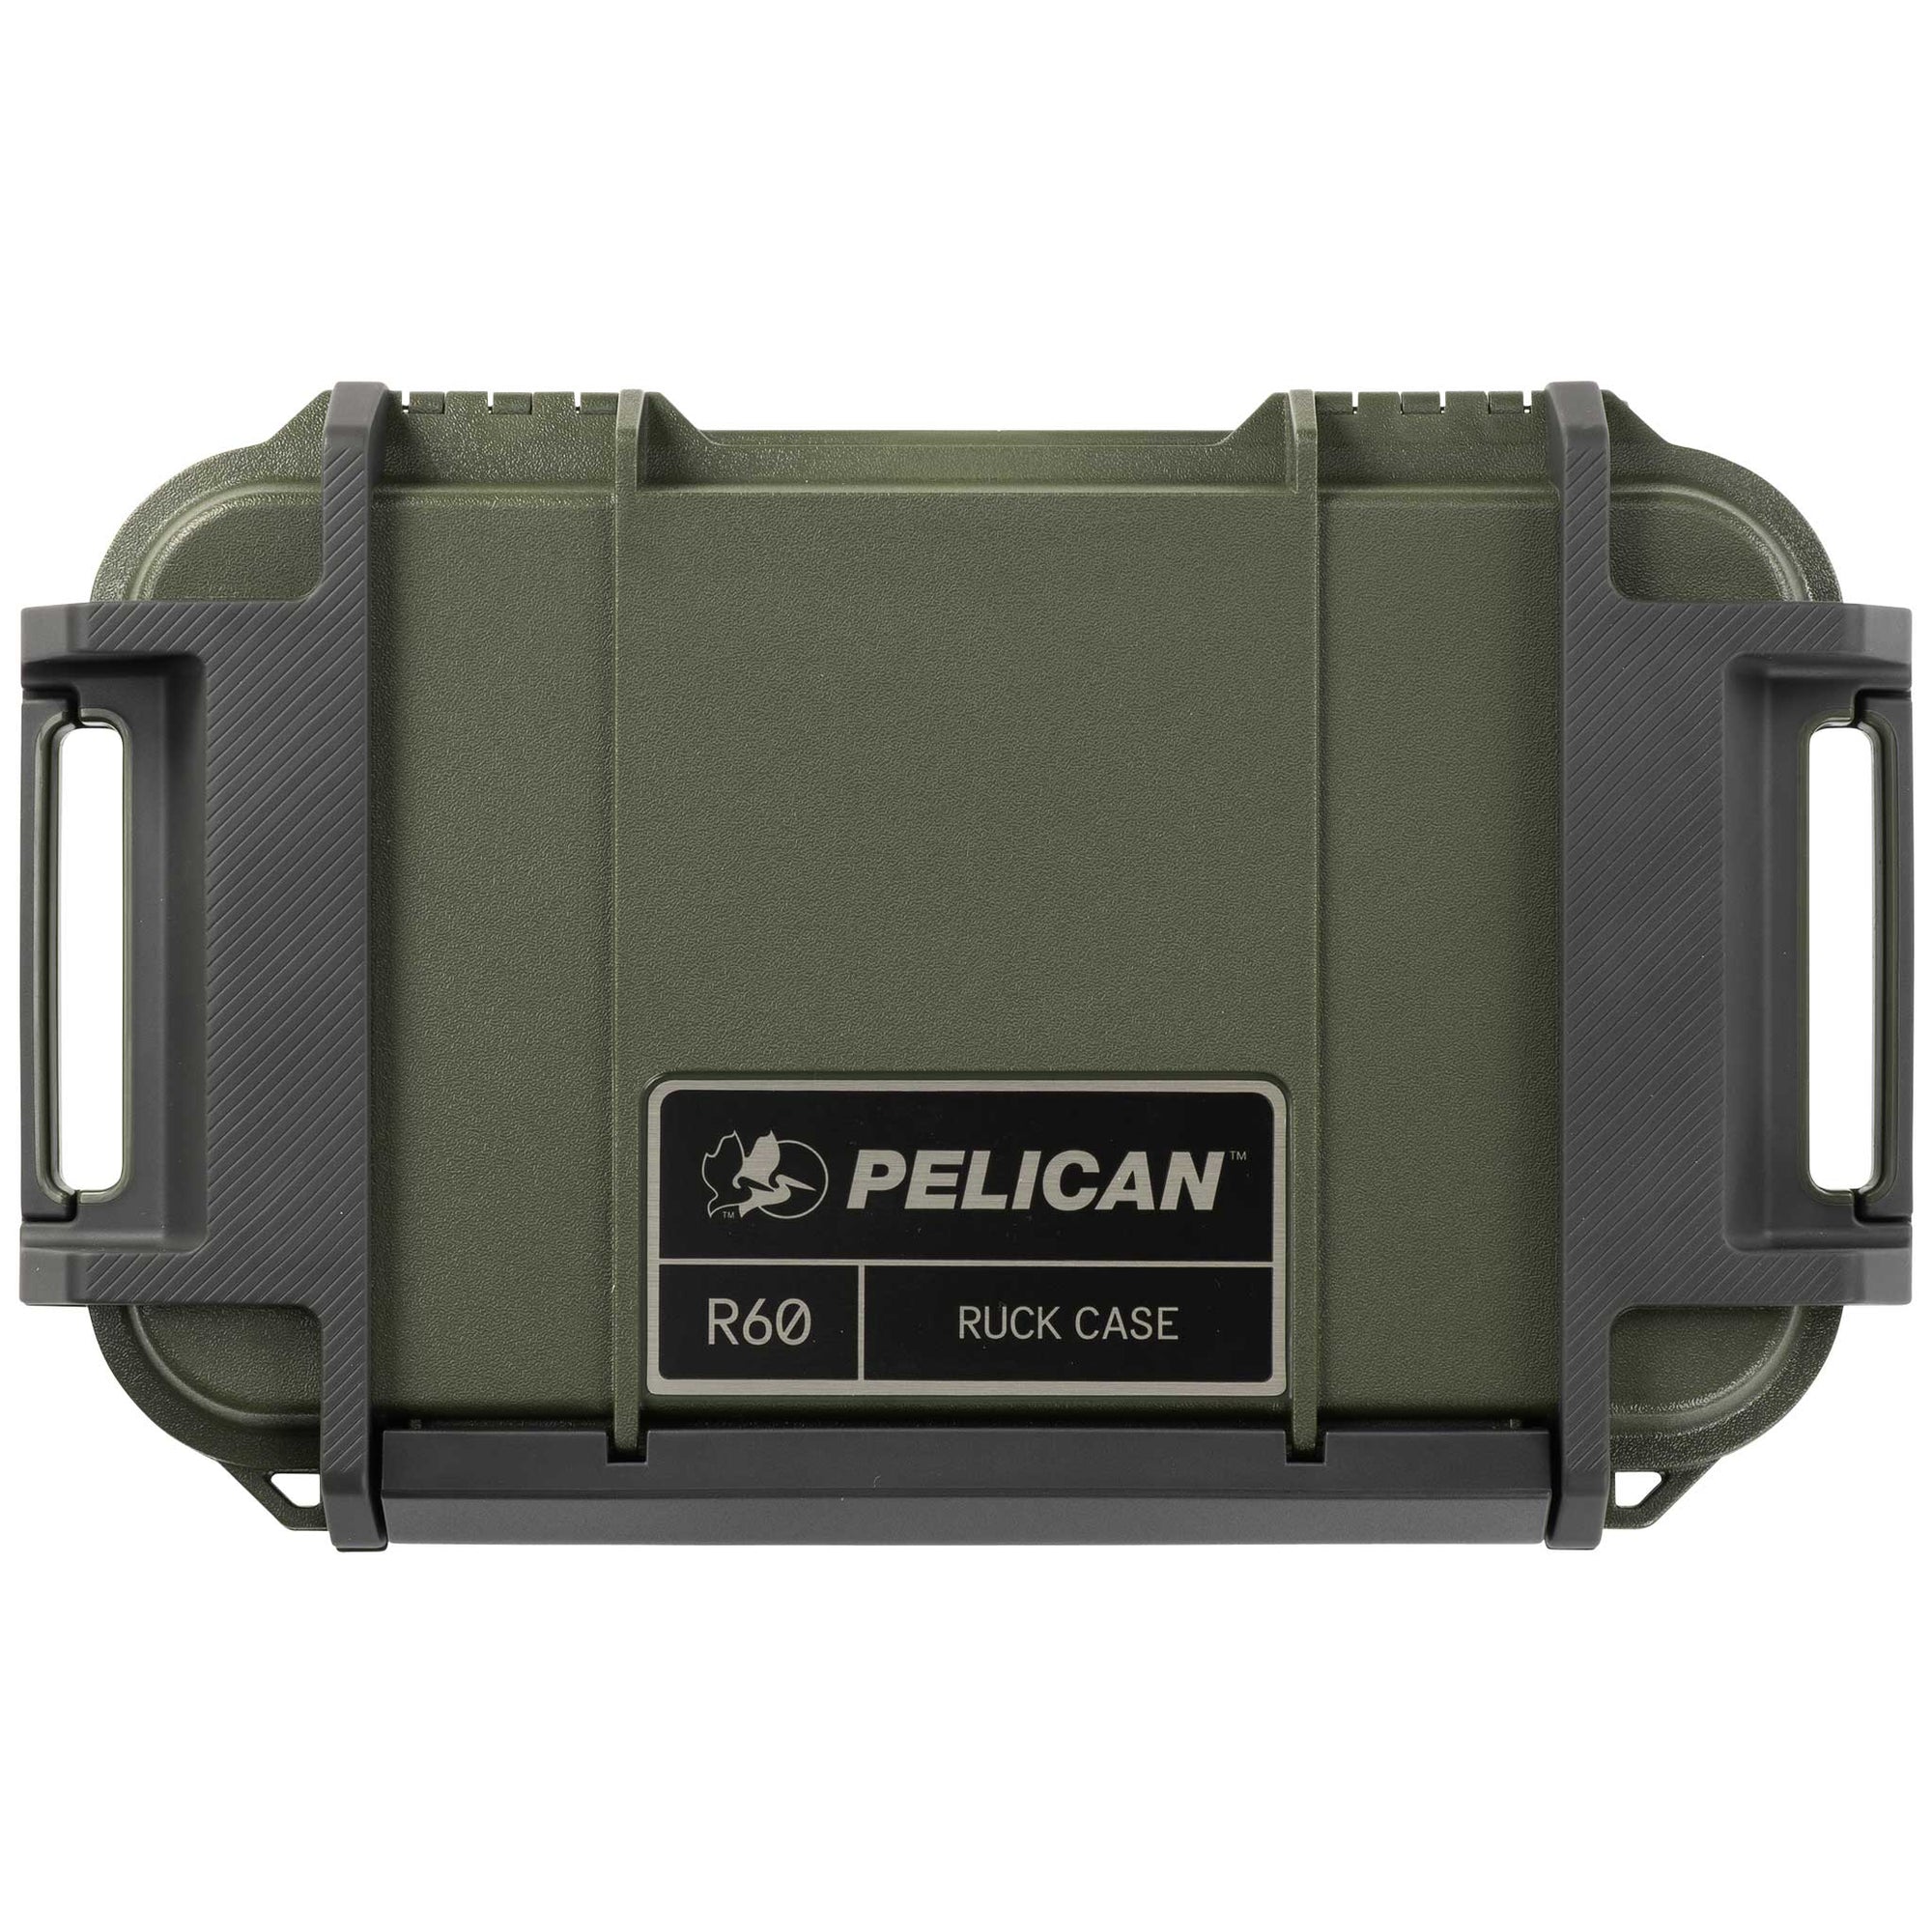 Pelican R60 waterproof ruck case black